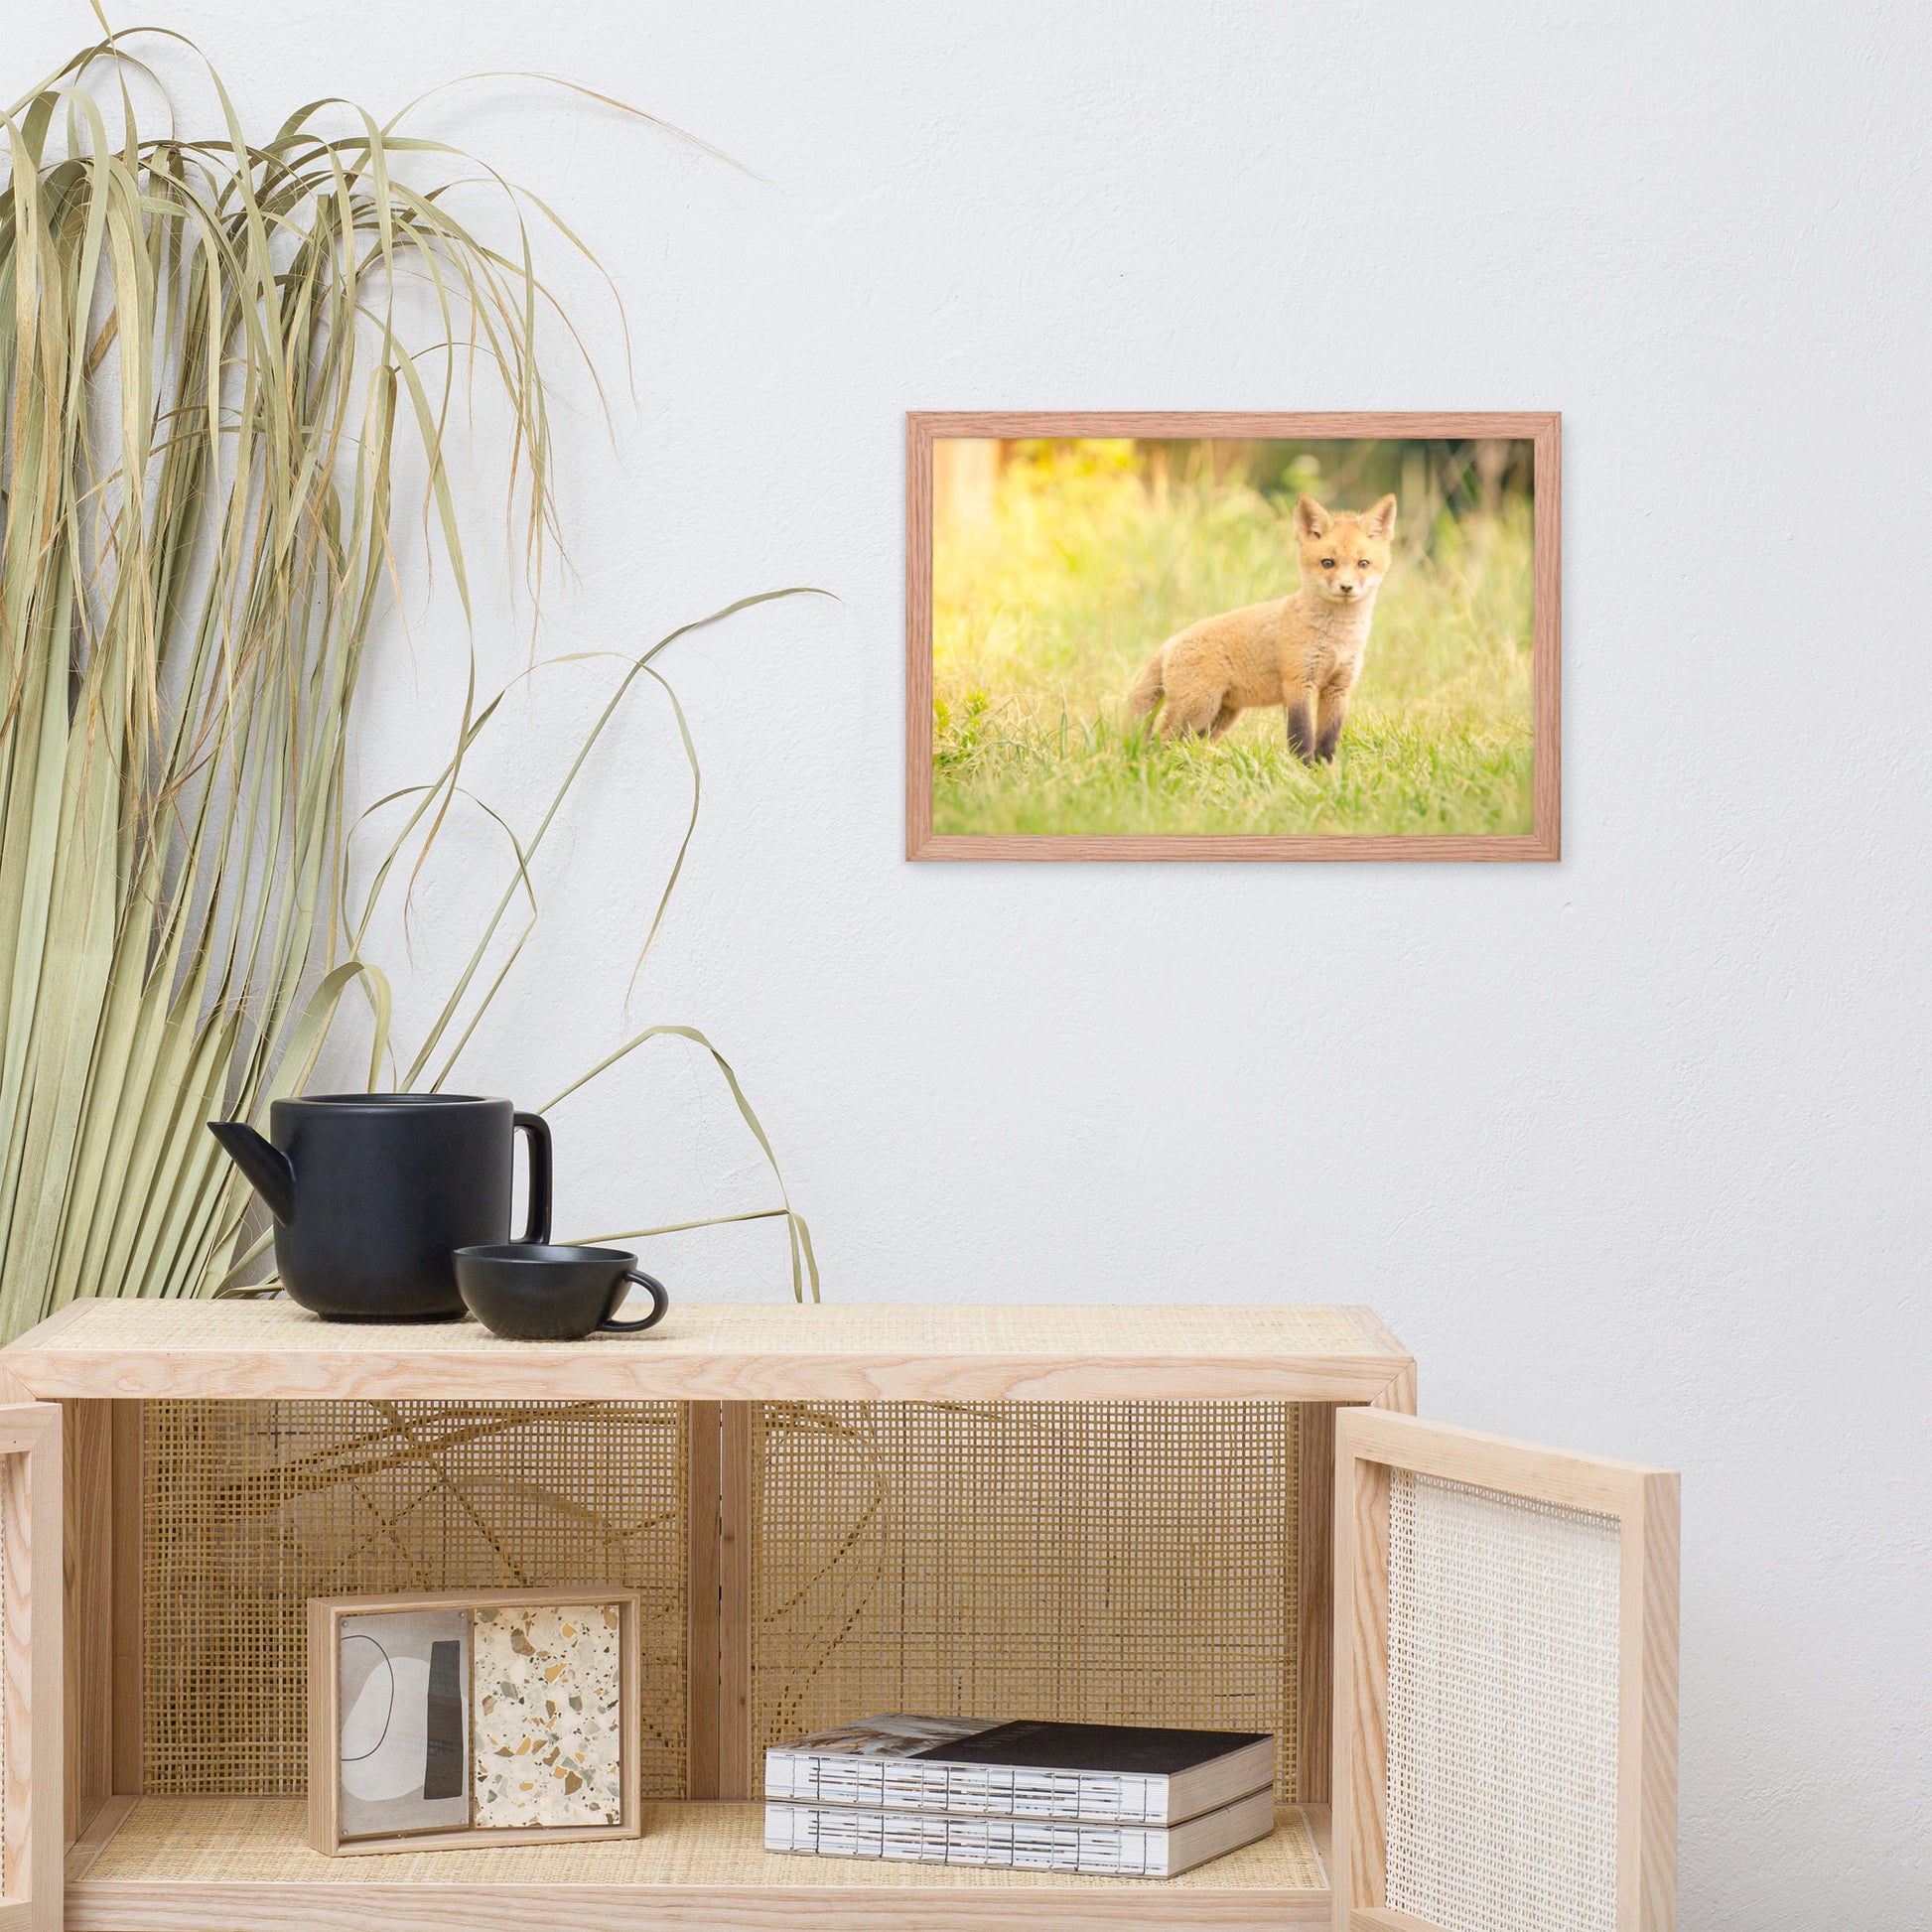 Best Nursery Art: Baby Red Fox in the Sun - Animal / Wildlife / Nature Artwork - Wall Decor - Framed Wall Art Print